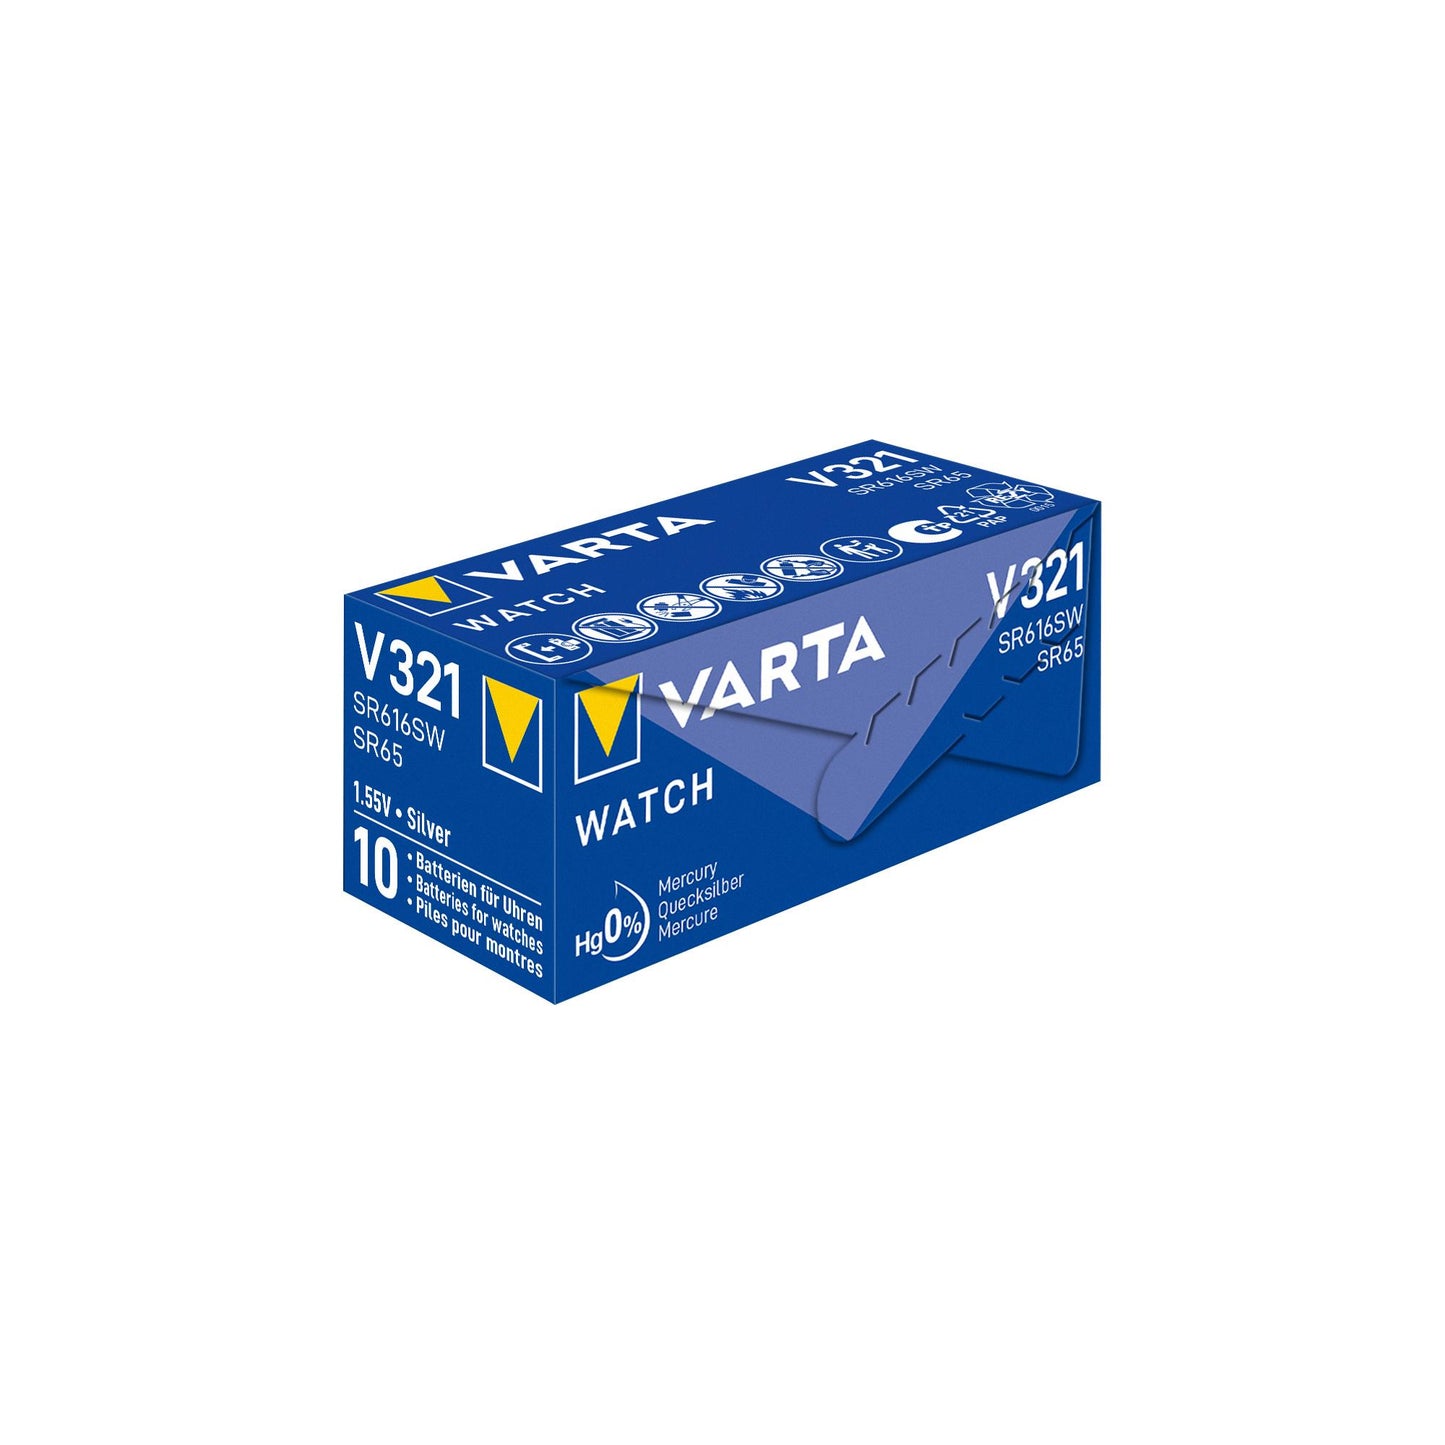 VARTA Batterie Silver Oxide Knopfzelle 321, SR65, 1.55V Watch, Retail (10-Pack)